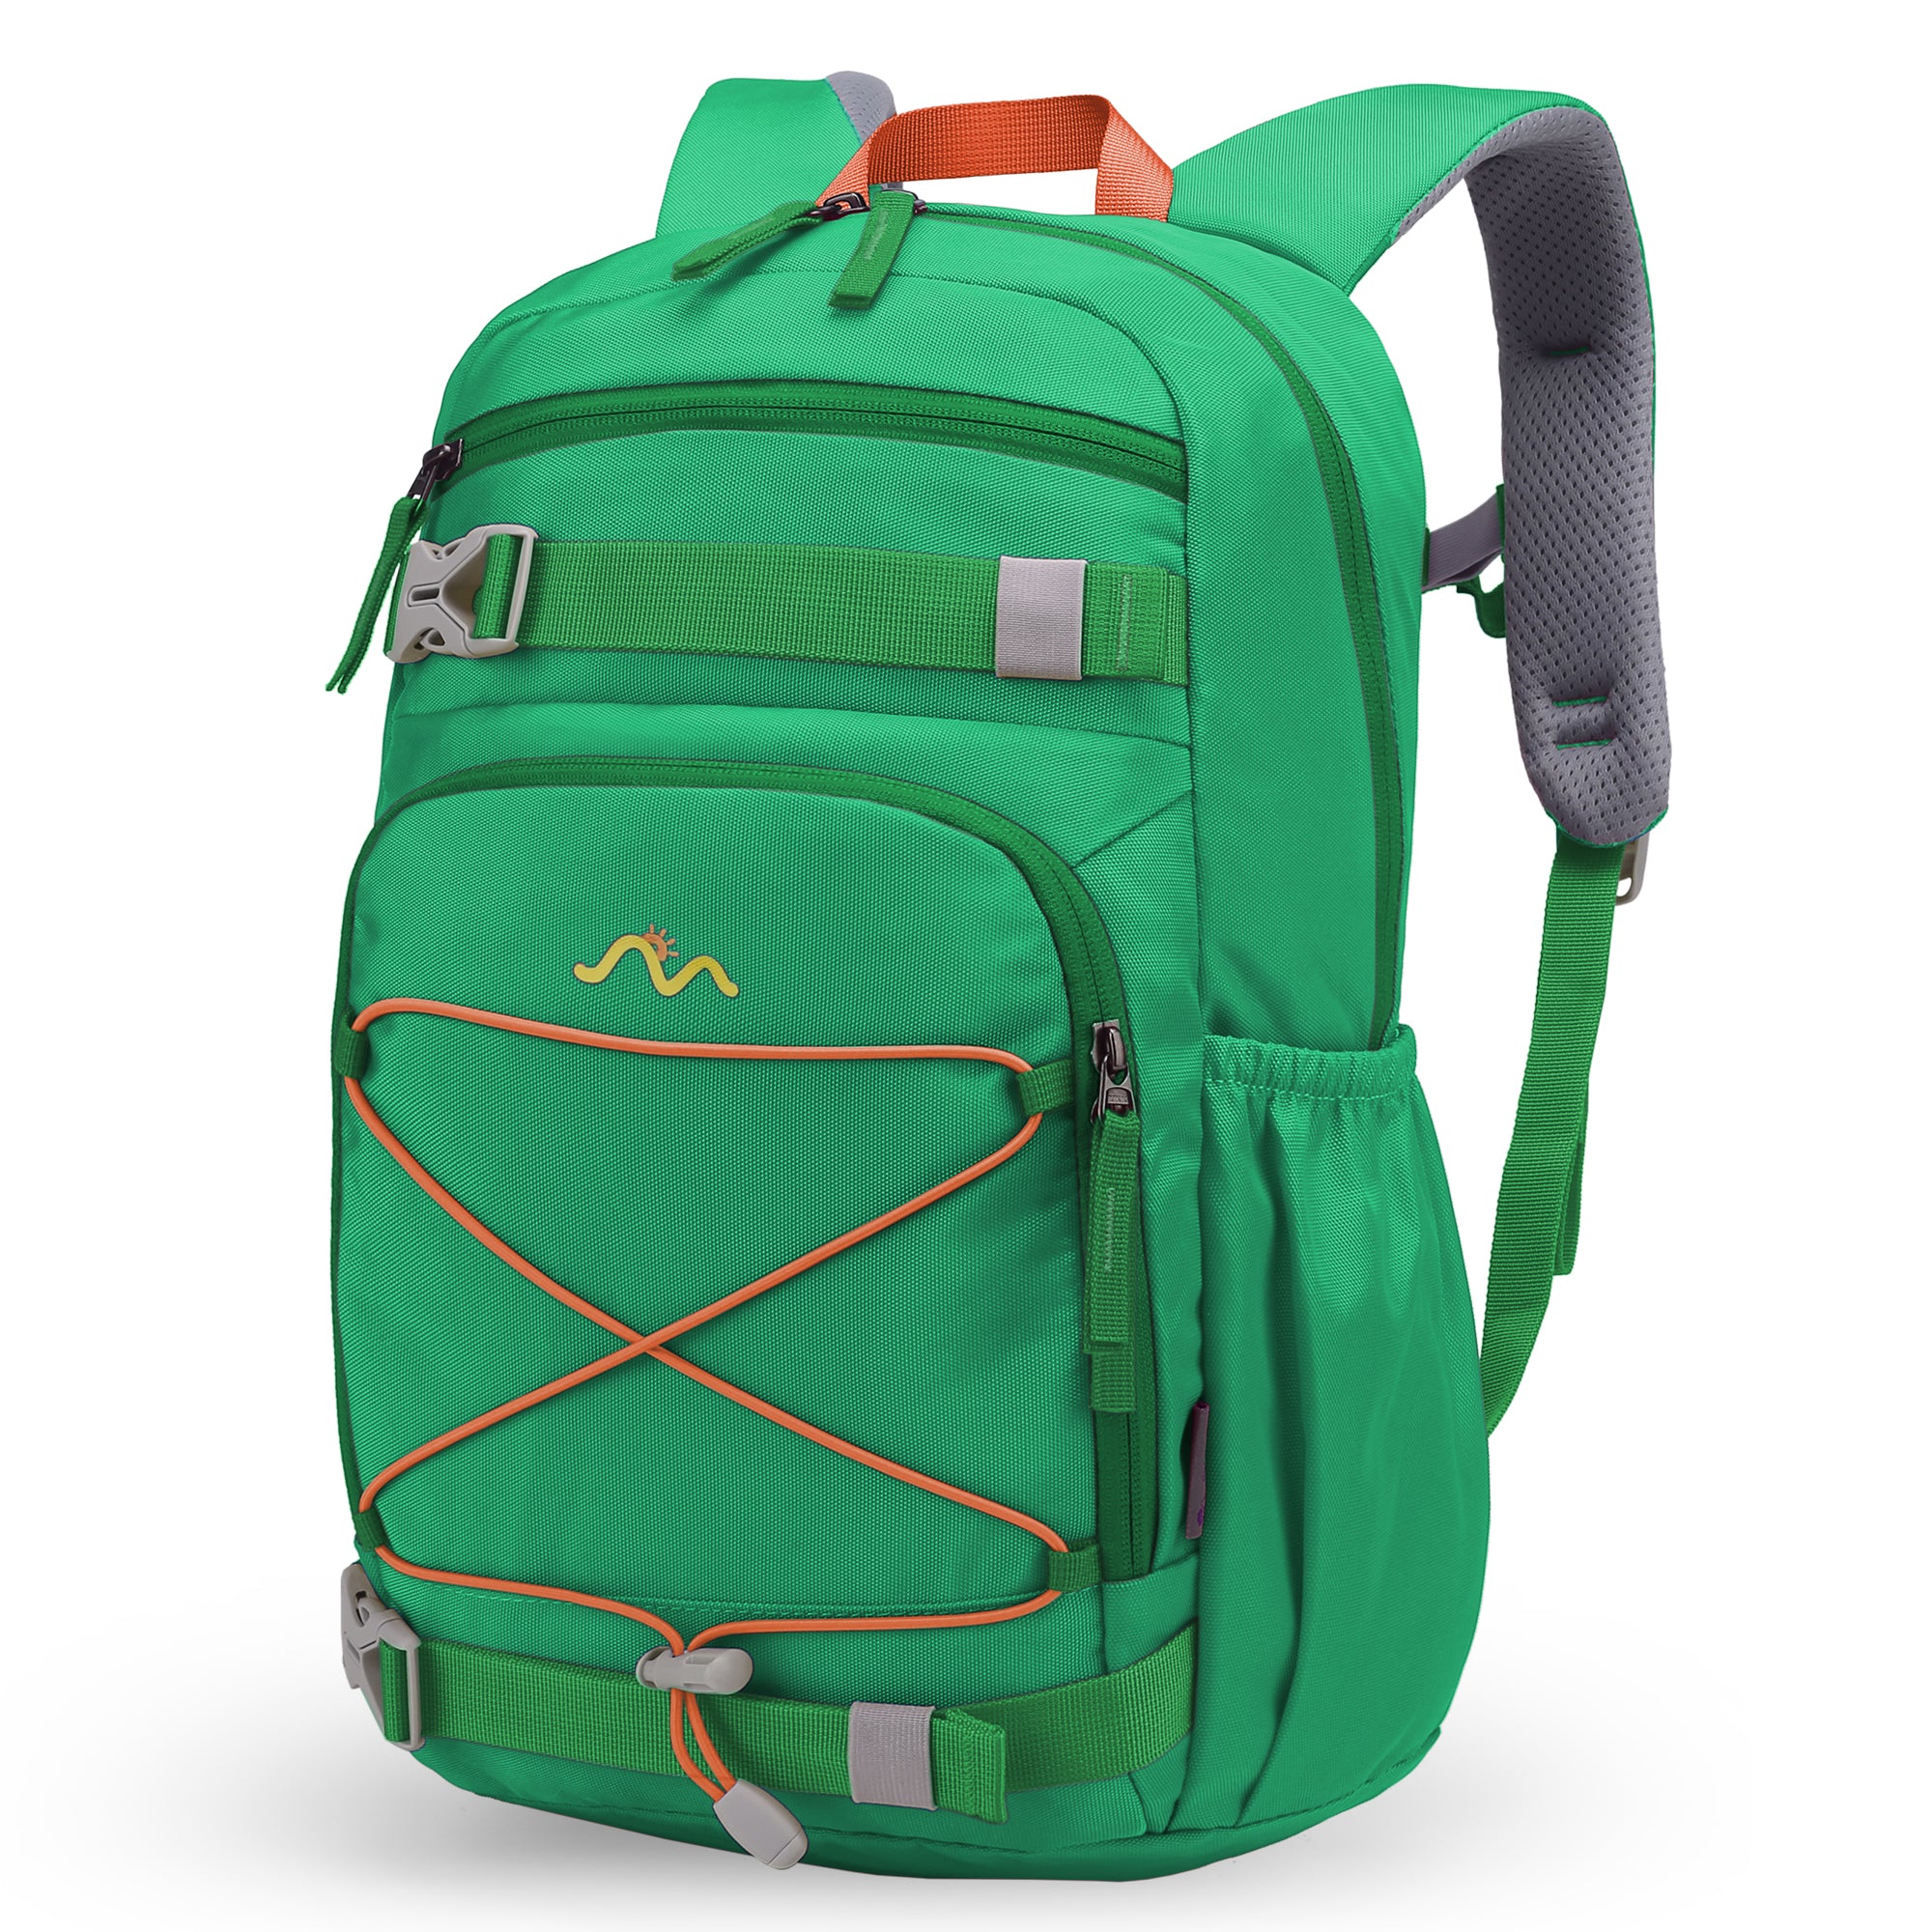 Green kids backpack,outdoor kid backpack